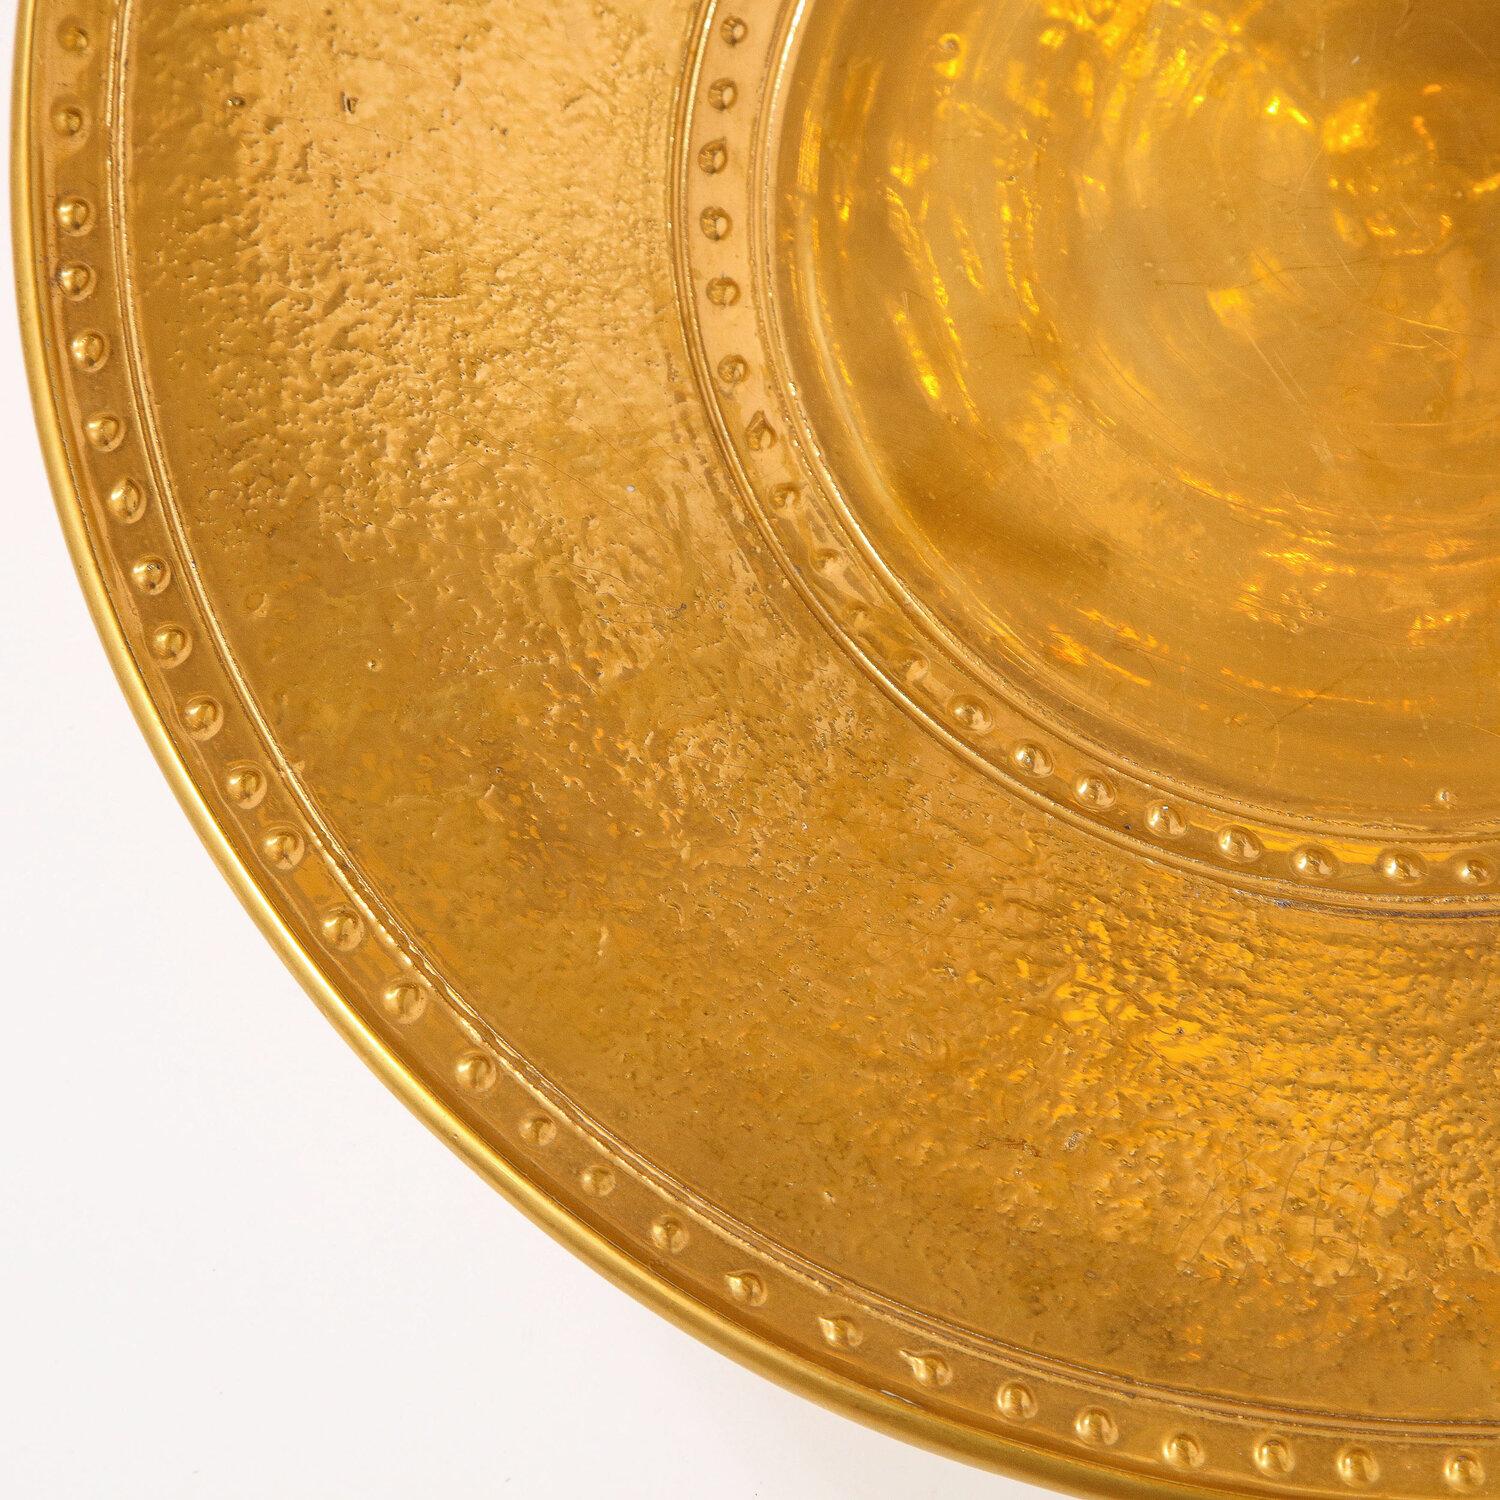 Modernist 24kt Gold Leaf Center Plate Signed Rondier by Lorin Marsh 1